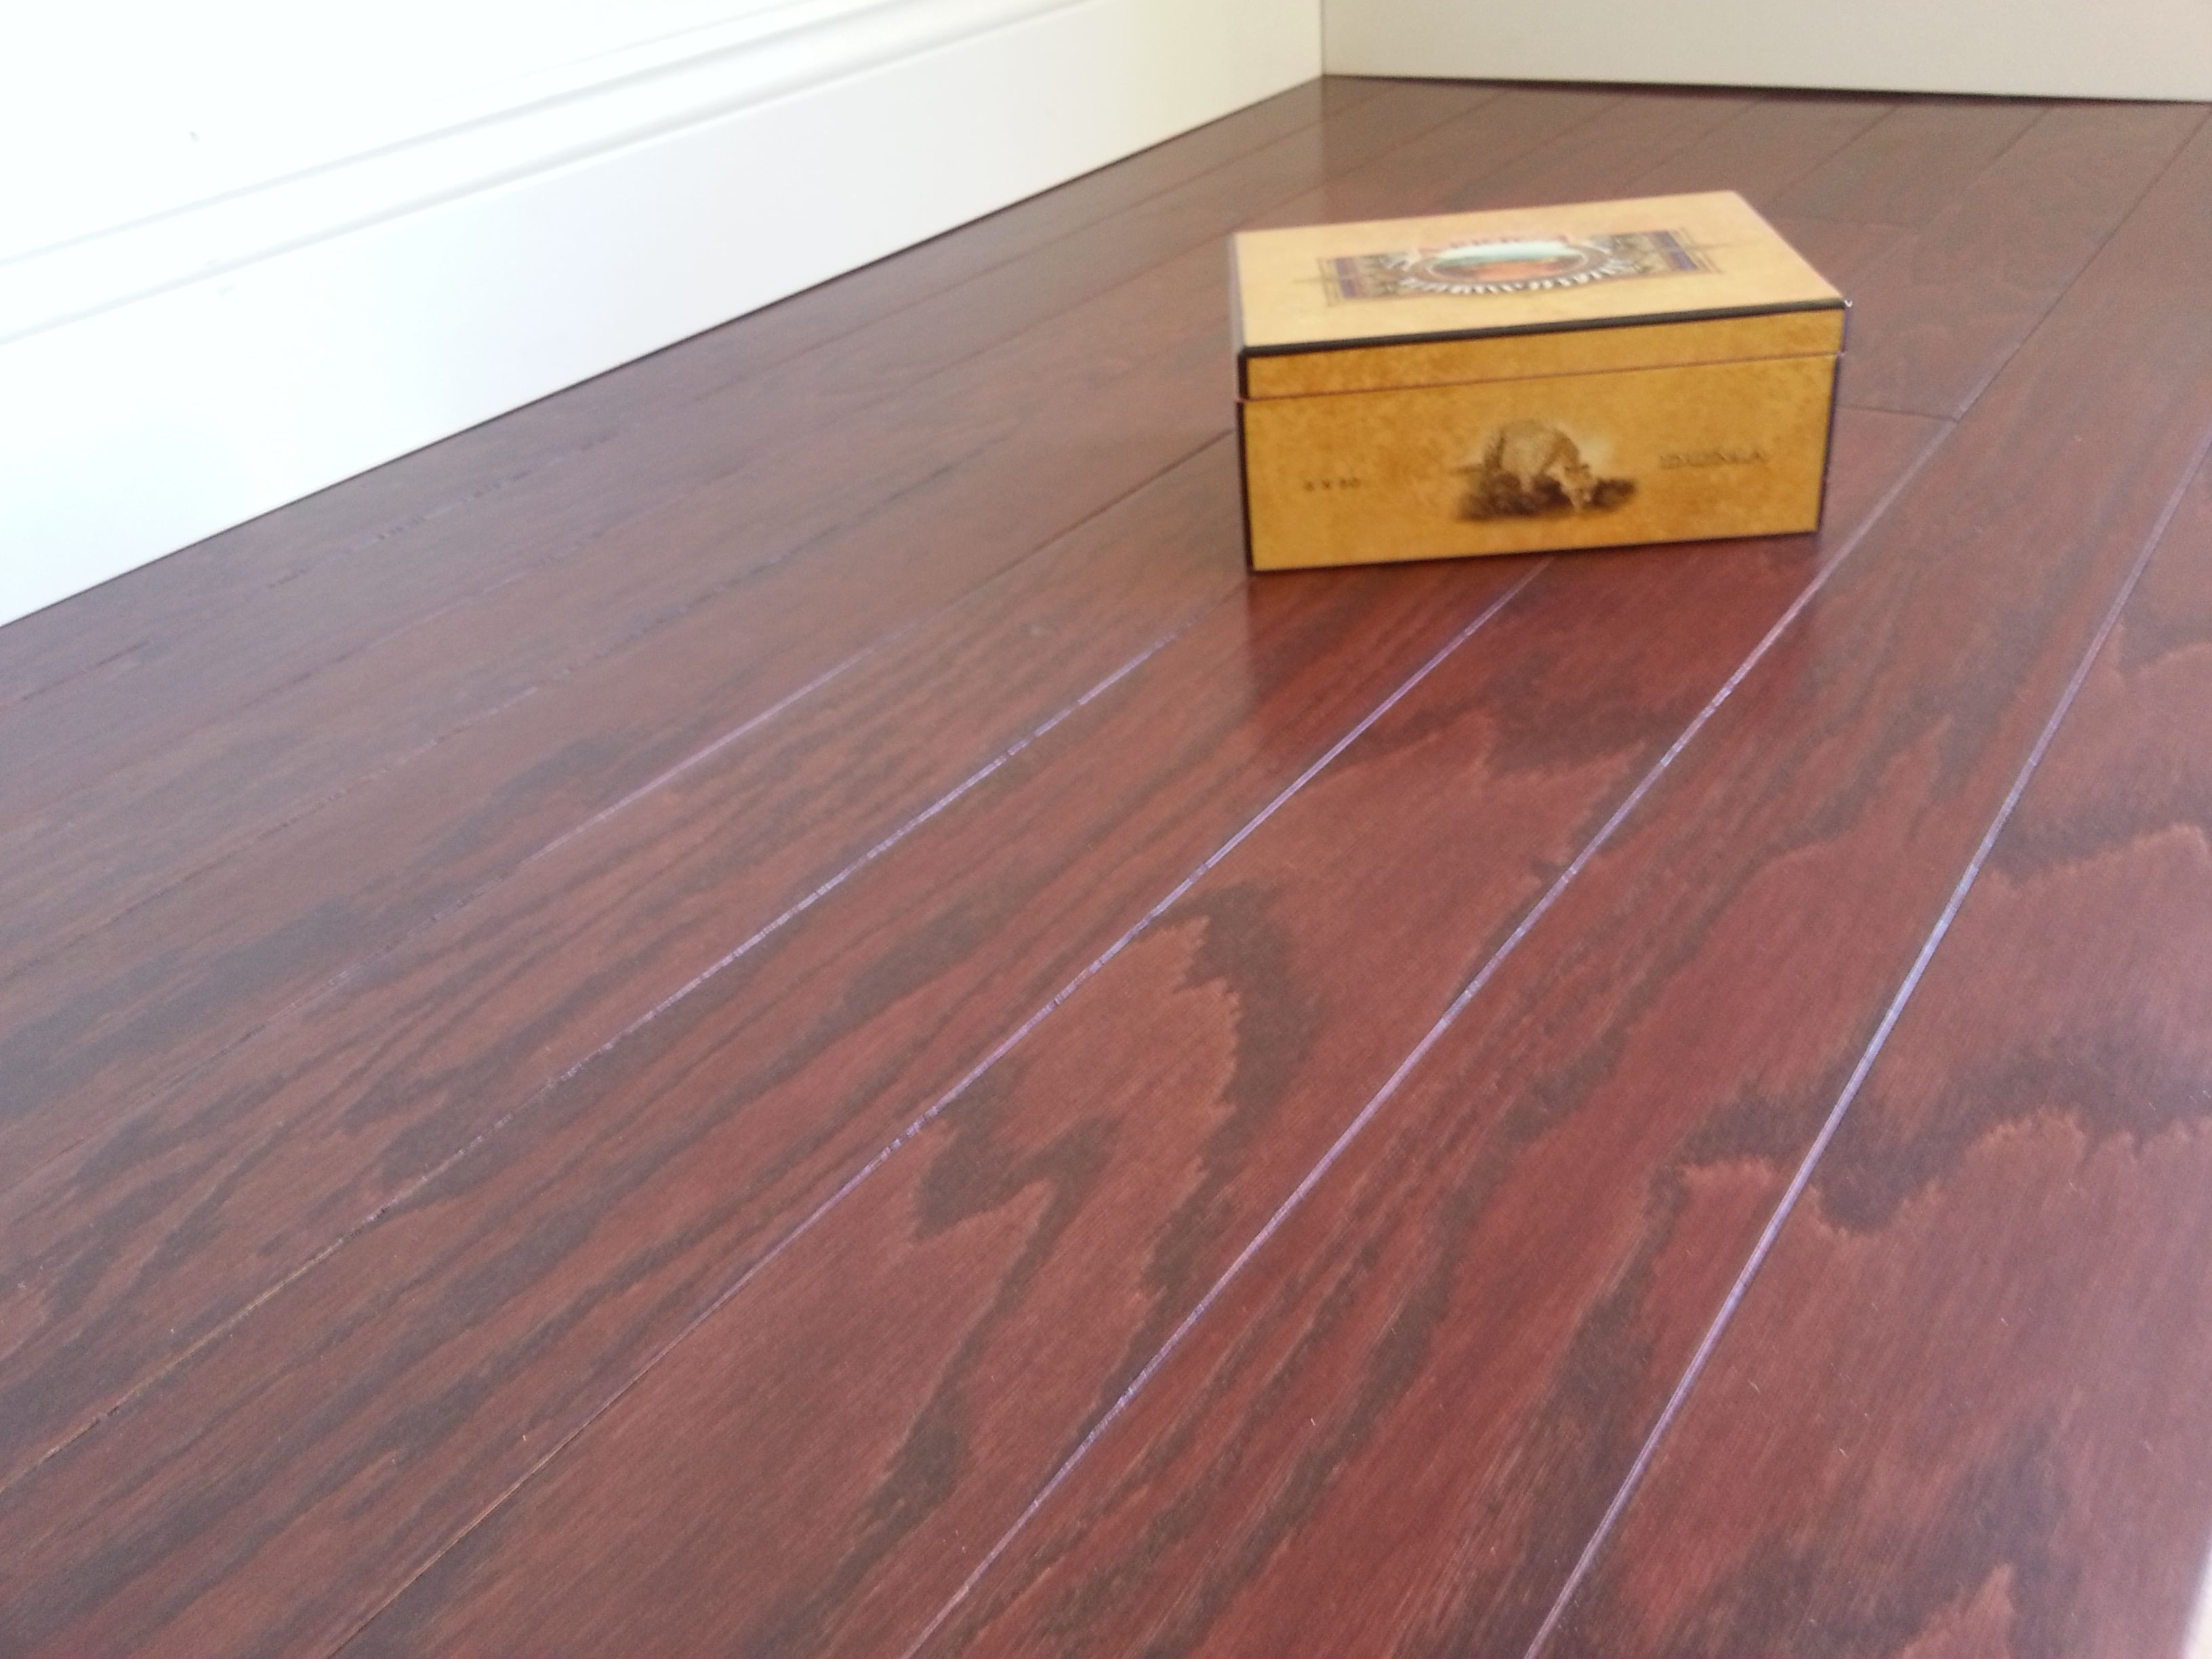 2 1 4 inch oak hardwood flooring of floors 4 less home design with regard to floors 4 less 3 1 4 symphonic engineered oak merlot hardwood flooring as low